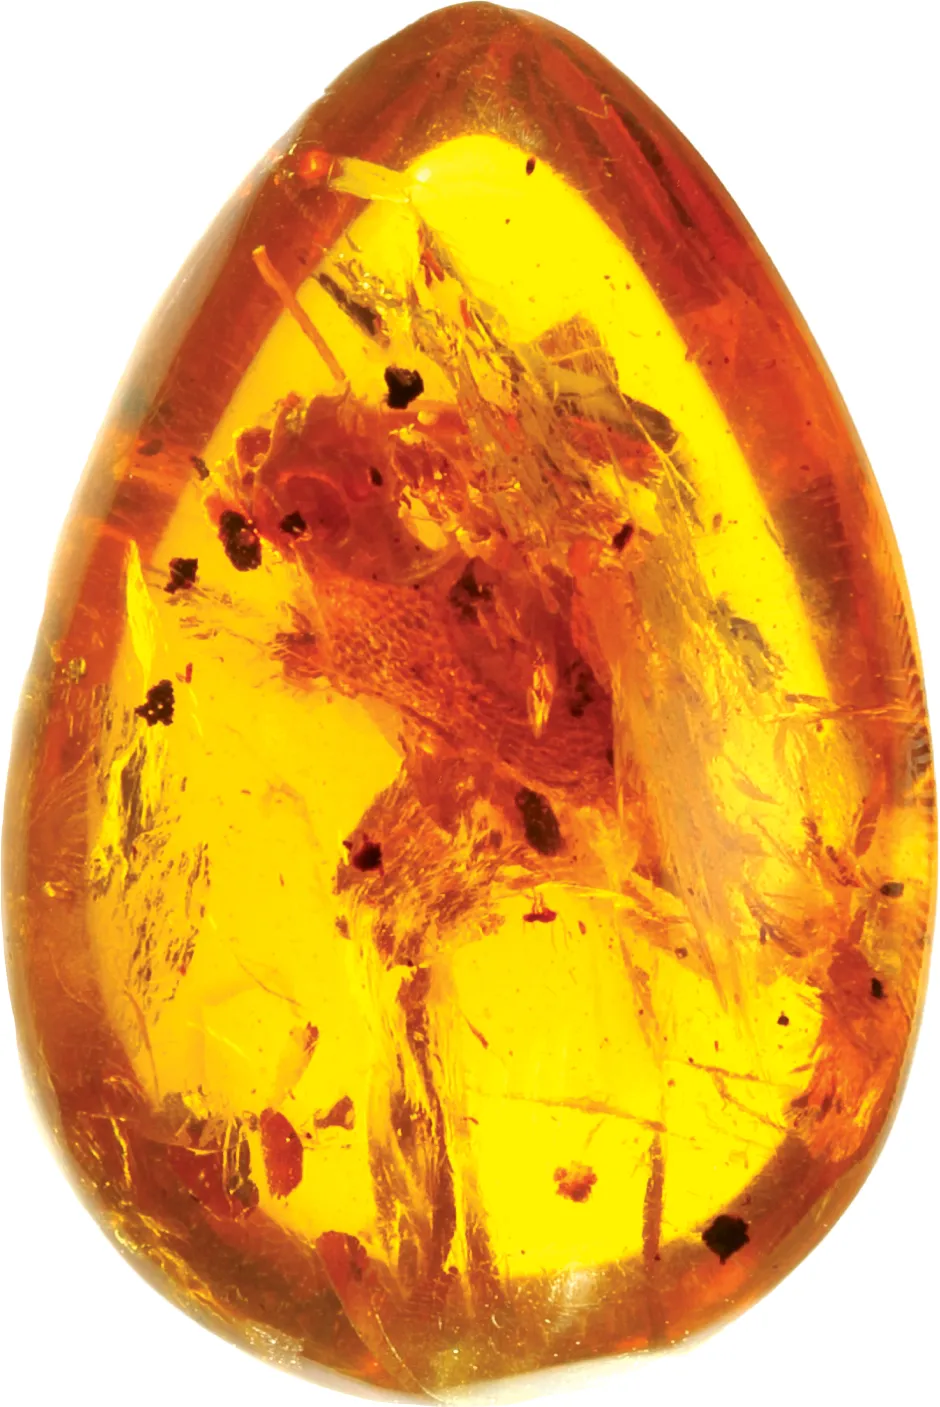 The albanerpetontids fossil was preserved in amber © Adolf Peretti/Daza et al/Science